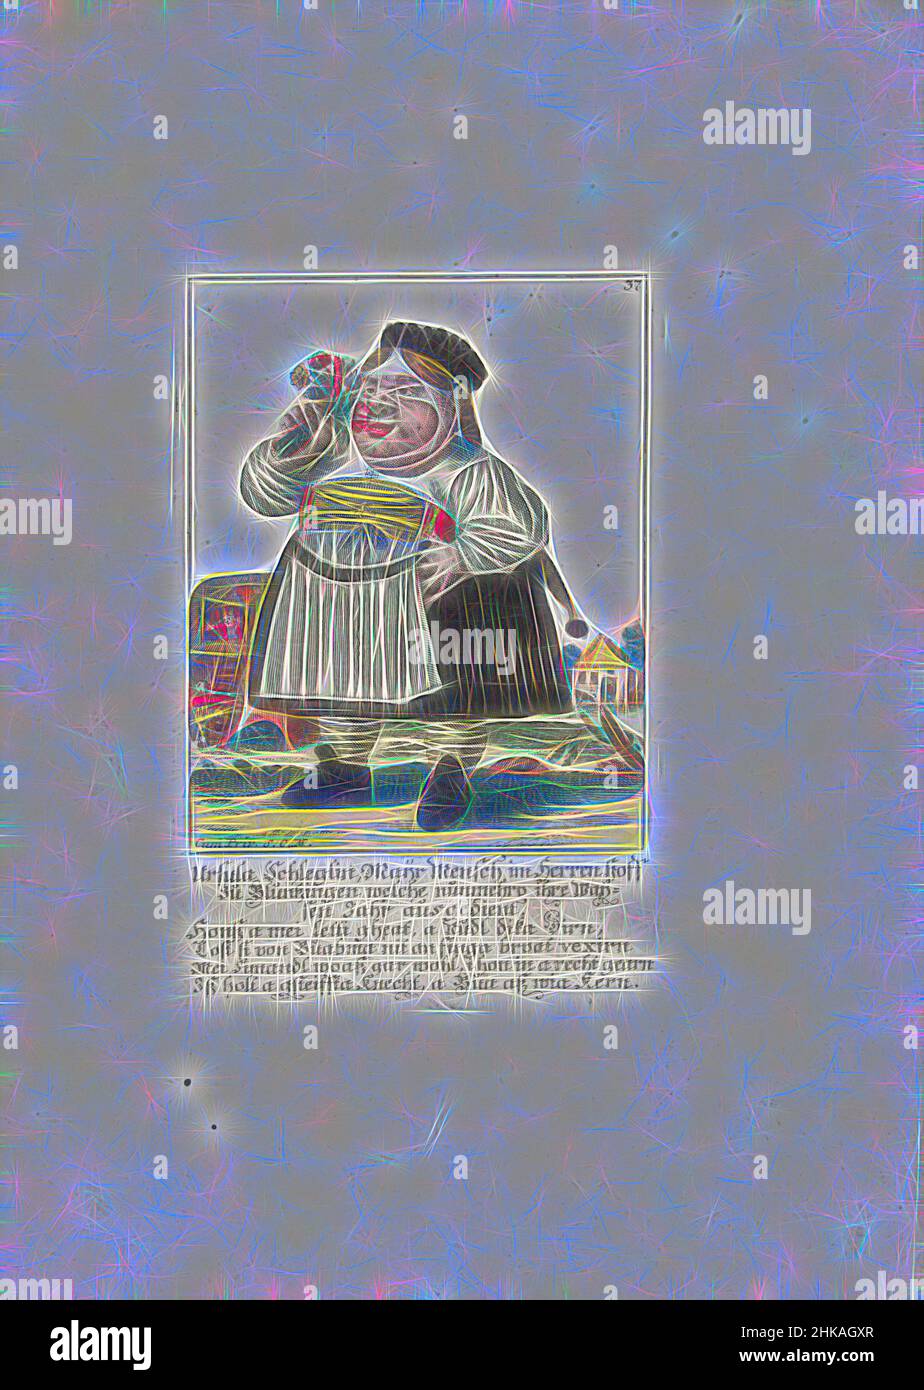 Inspired by The dwarf Ursula Schleglin, c. 1710, Ursula Schleglin, Maijr Mensch im Herren hoff zu Bluntzingen welche nunmehro ihre Waijsen Jahr ausgedient, Il Callotto resurcitato oder Neu eingerichtes Zwerchen Cabinet, The dwarf Ursula Schleglin as a peasant woman. In the caption below the title, a, Reimagined by Artotop. Classic art reinvented with a modern twist. Design of warm cheerful glowing of brightness and light ray radiance. Photography inspired by surrealism and futurism, embracing dynamic energy of modern technology, movement, speed and revolutionize culture Stock Photo